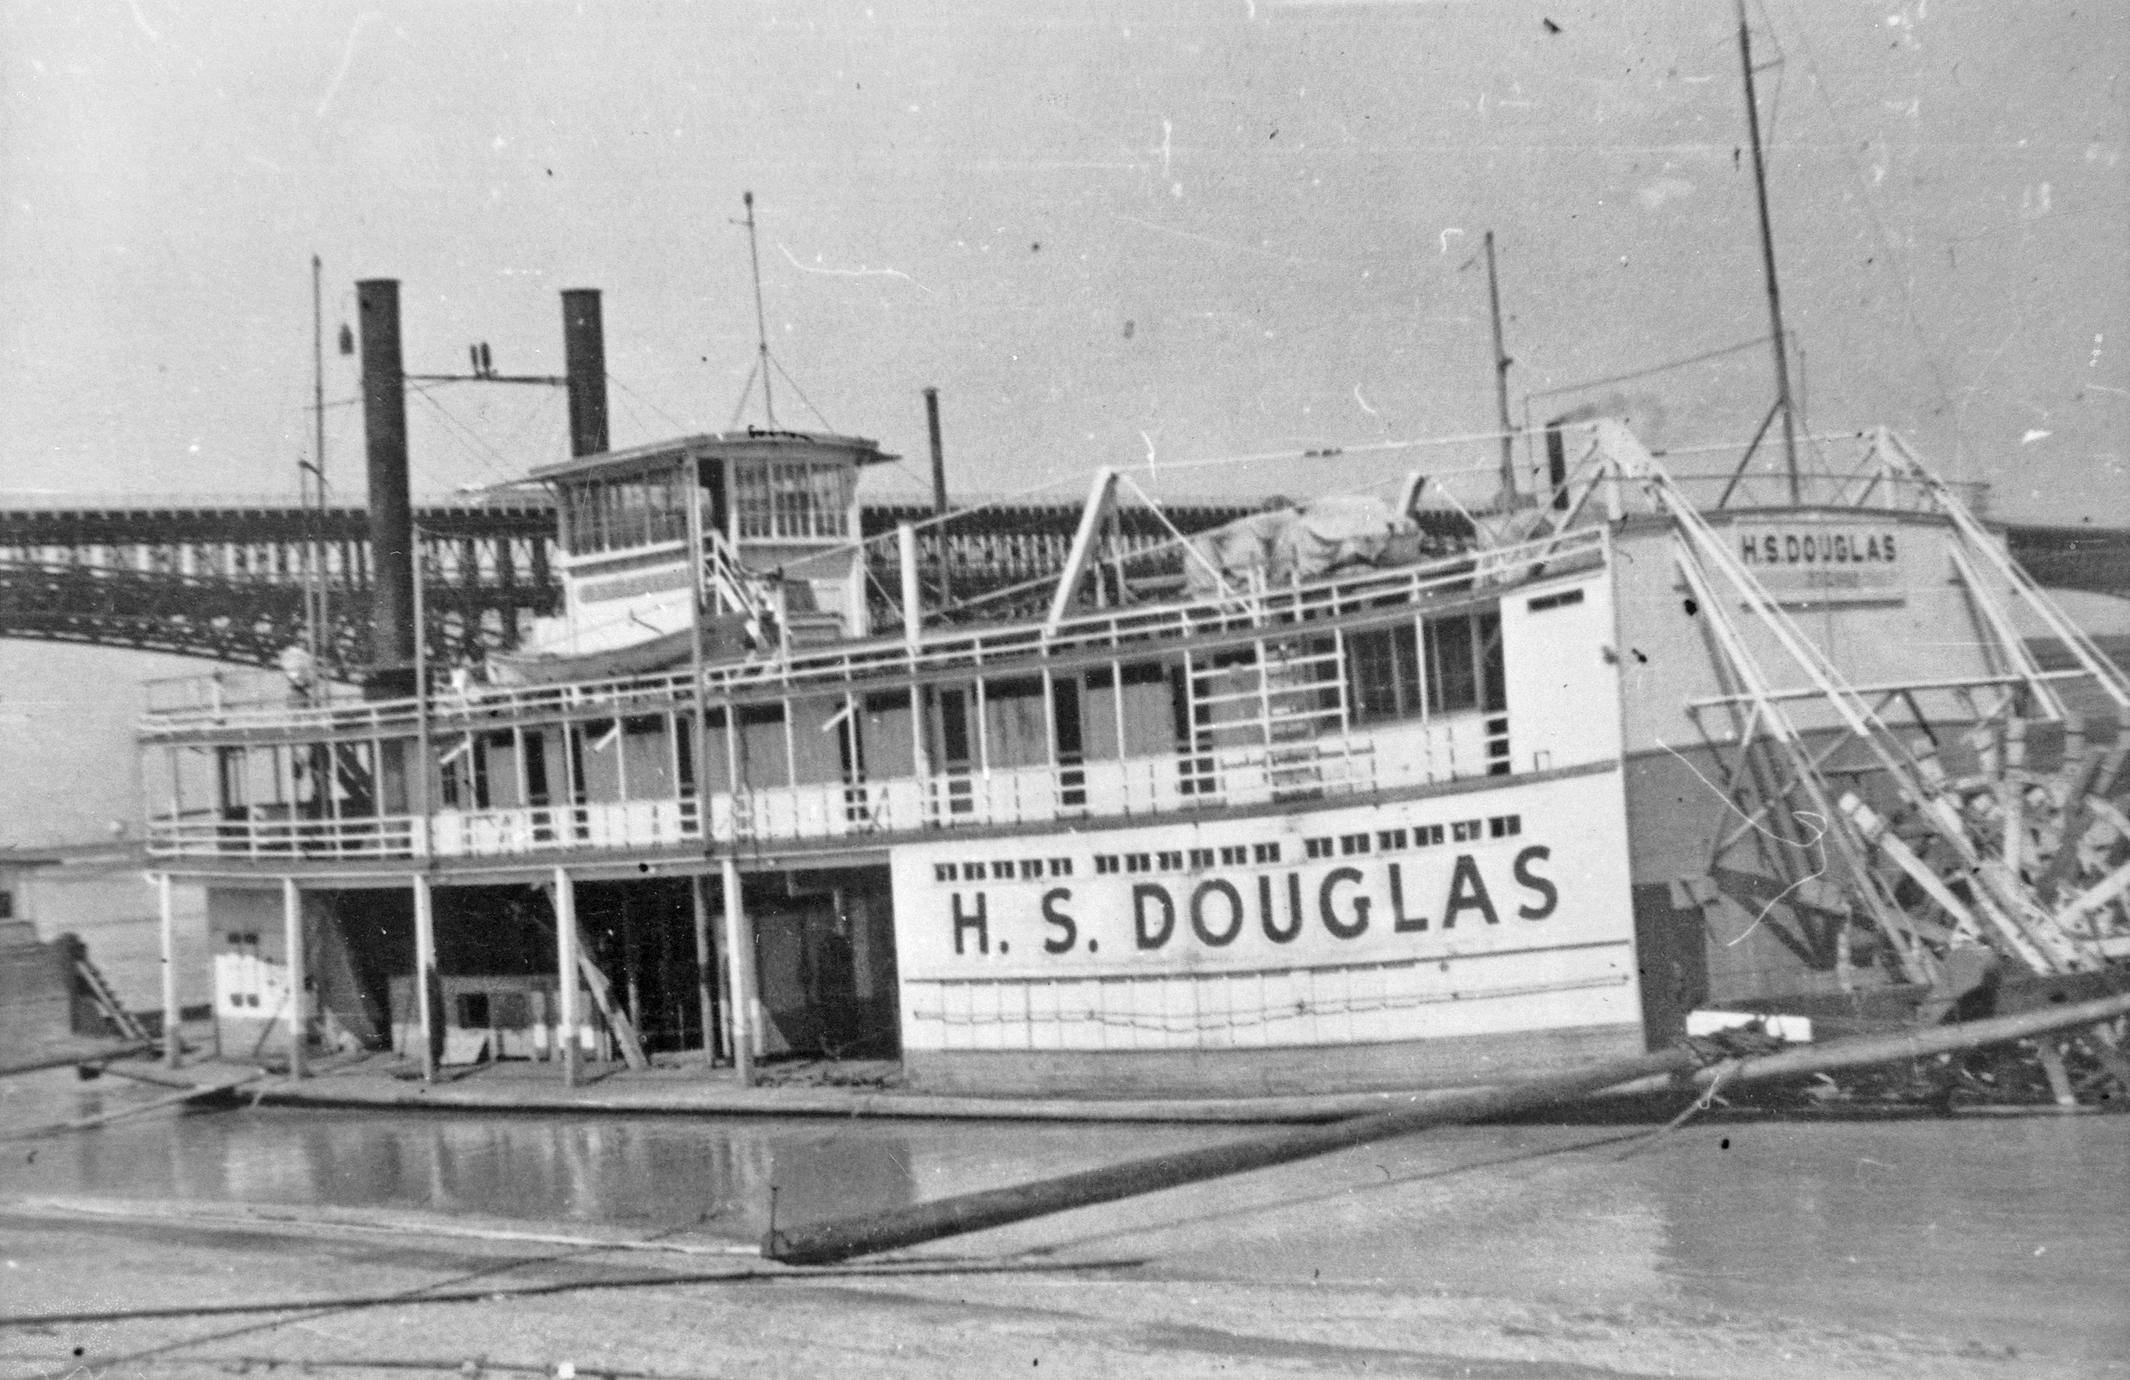 H. S. Douglas (Towboat, 1929-1949)